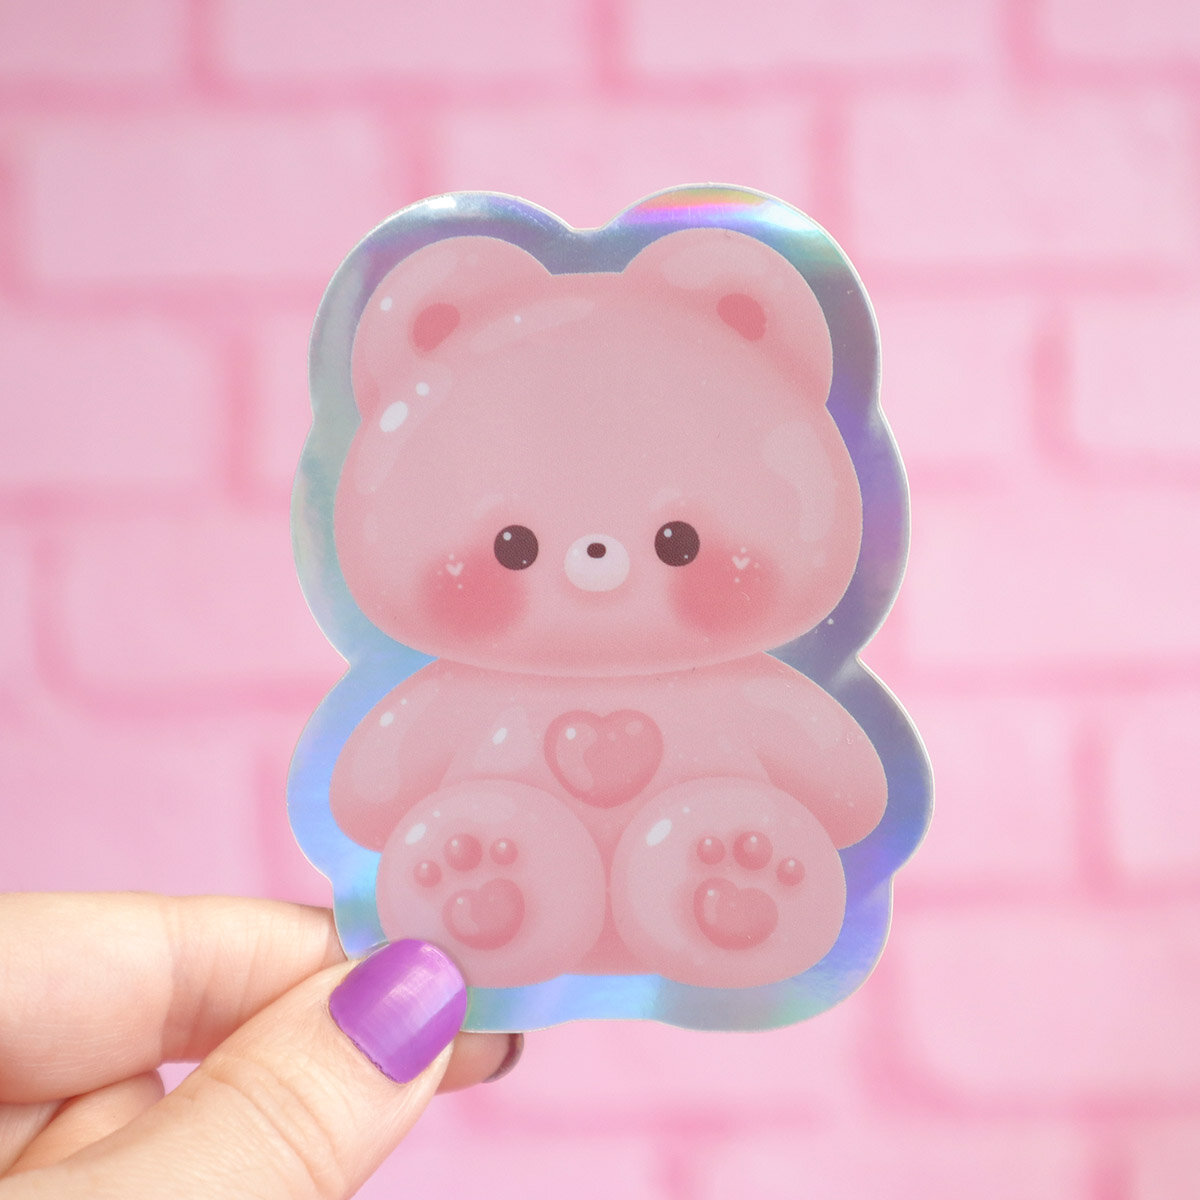 Holografisk sticker - Rosa gummibjörn